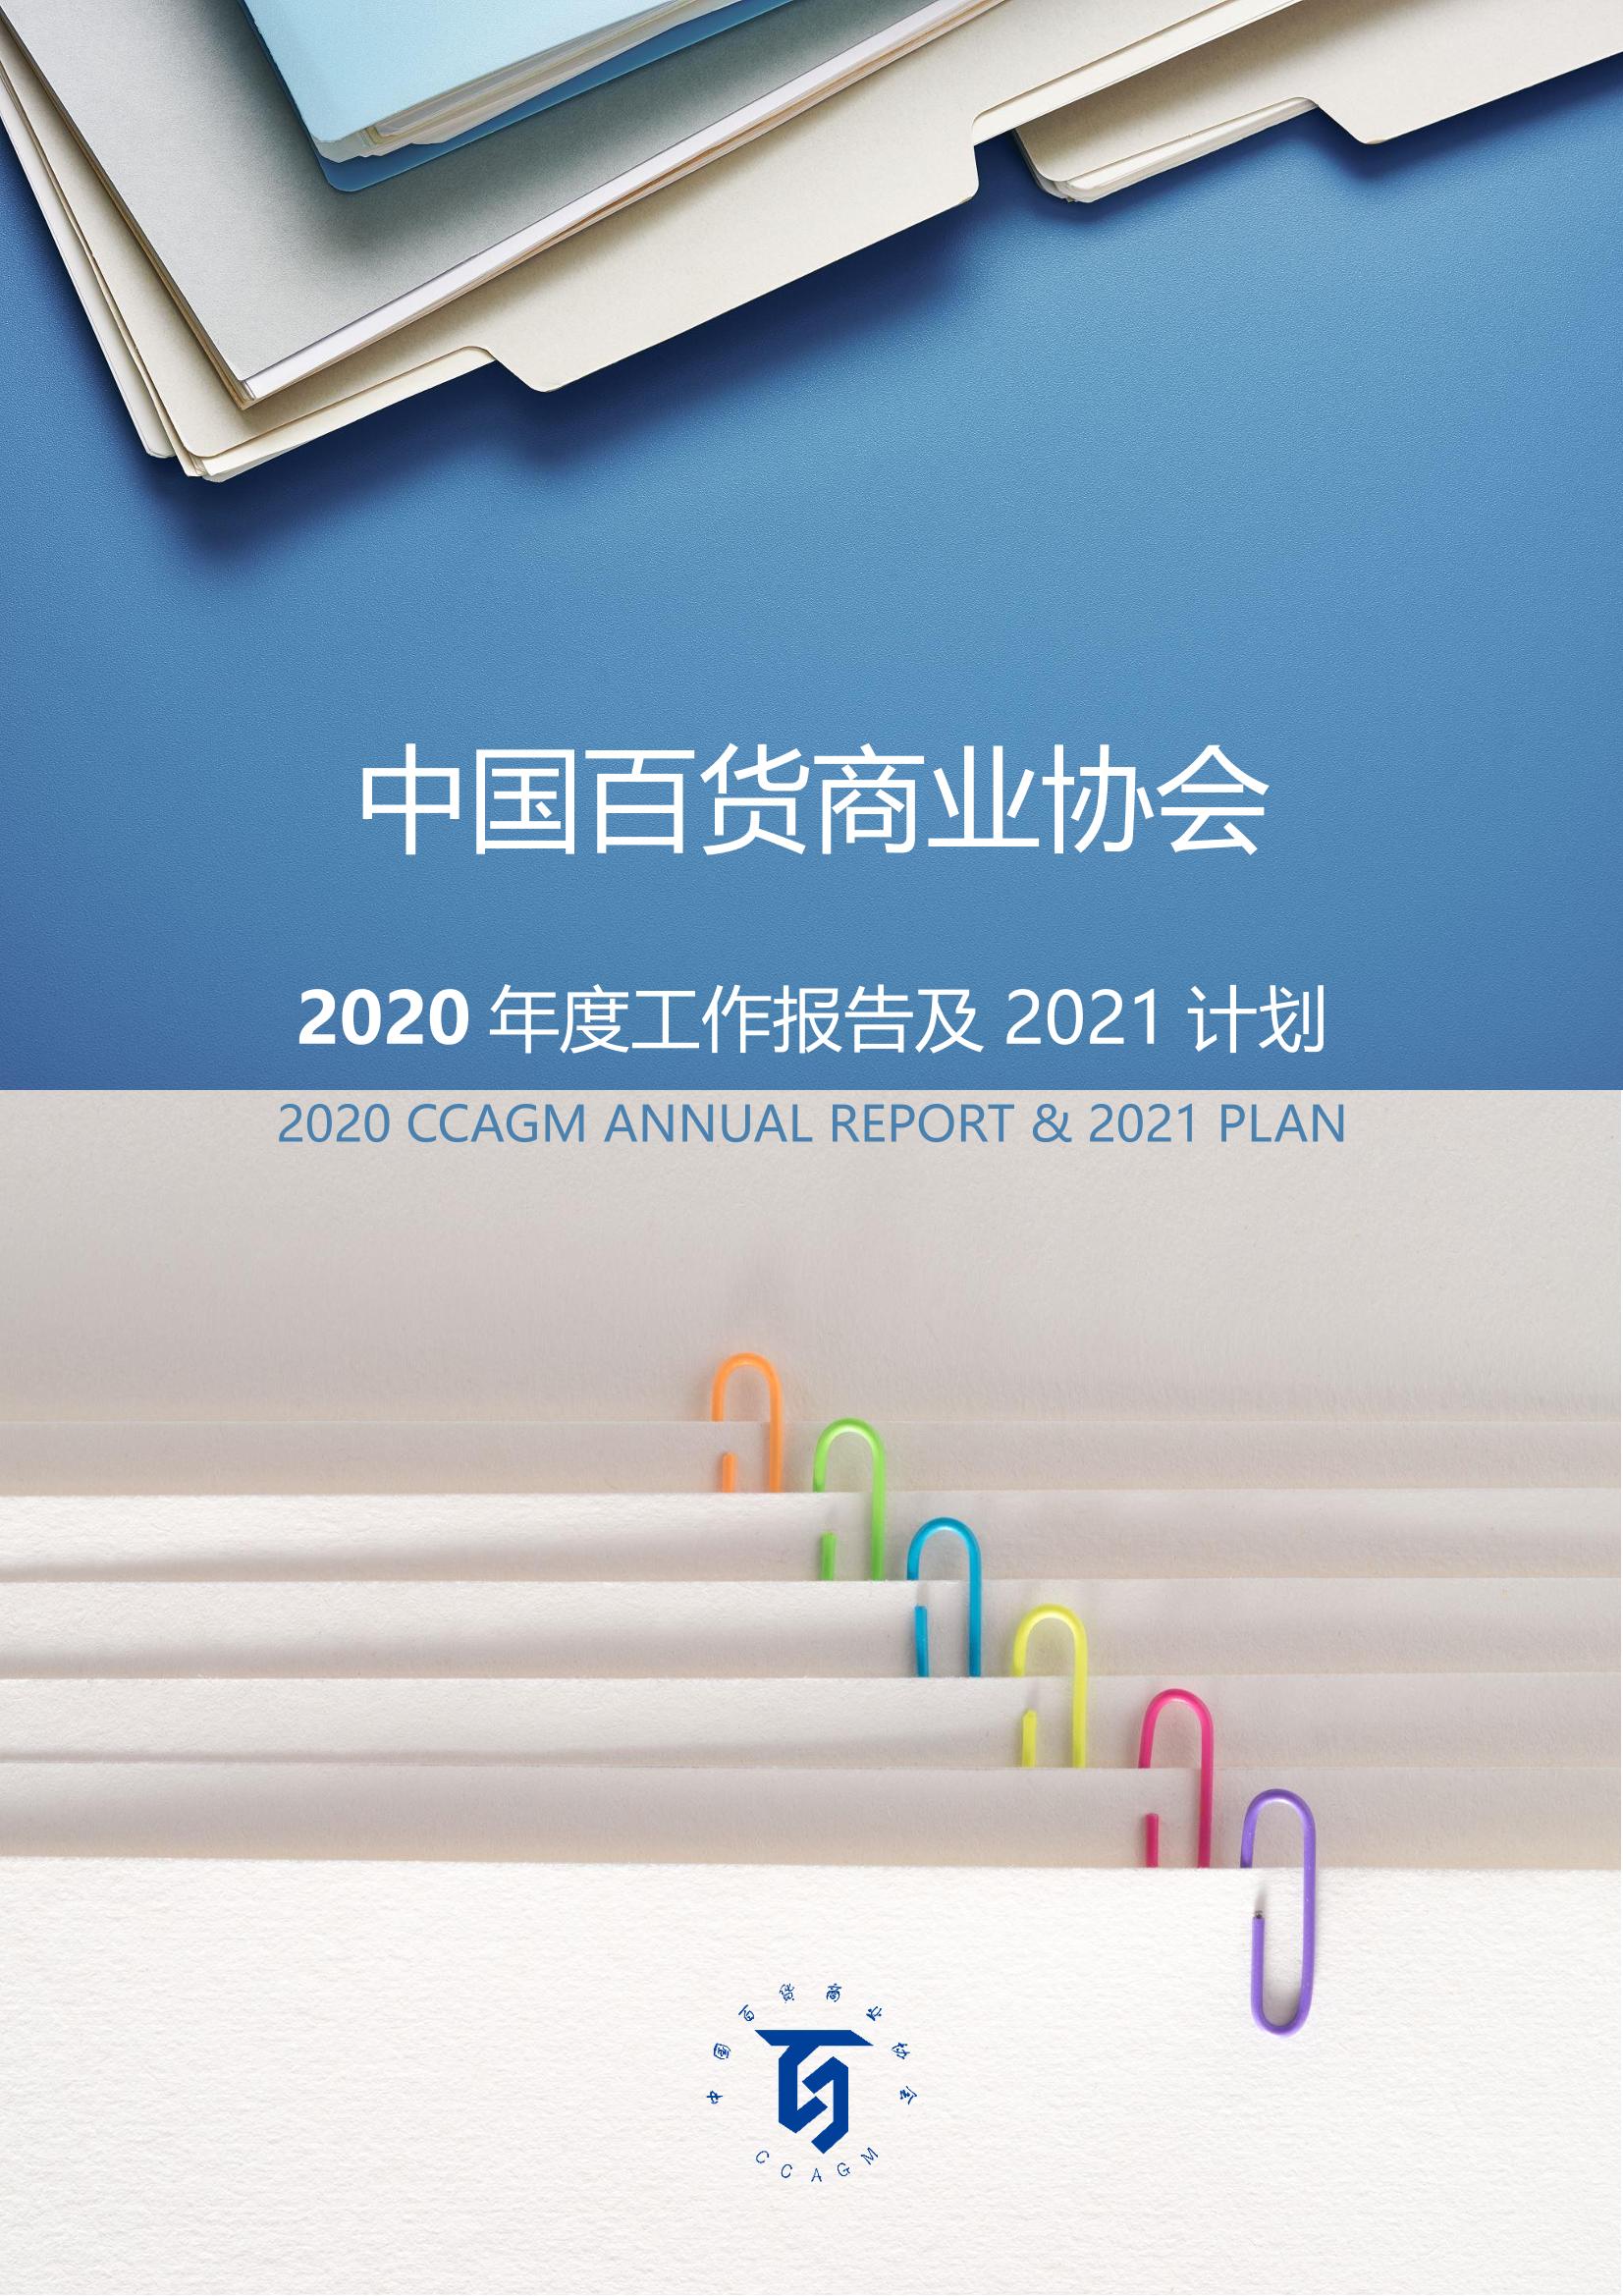 /uploads/image/2021/08/25/中百协2020年度工作报告及2021计划-1.jpg